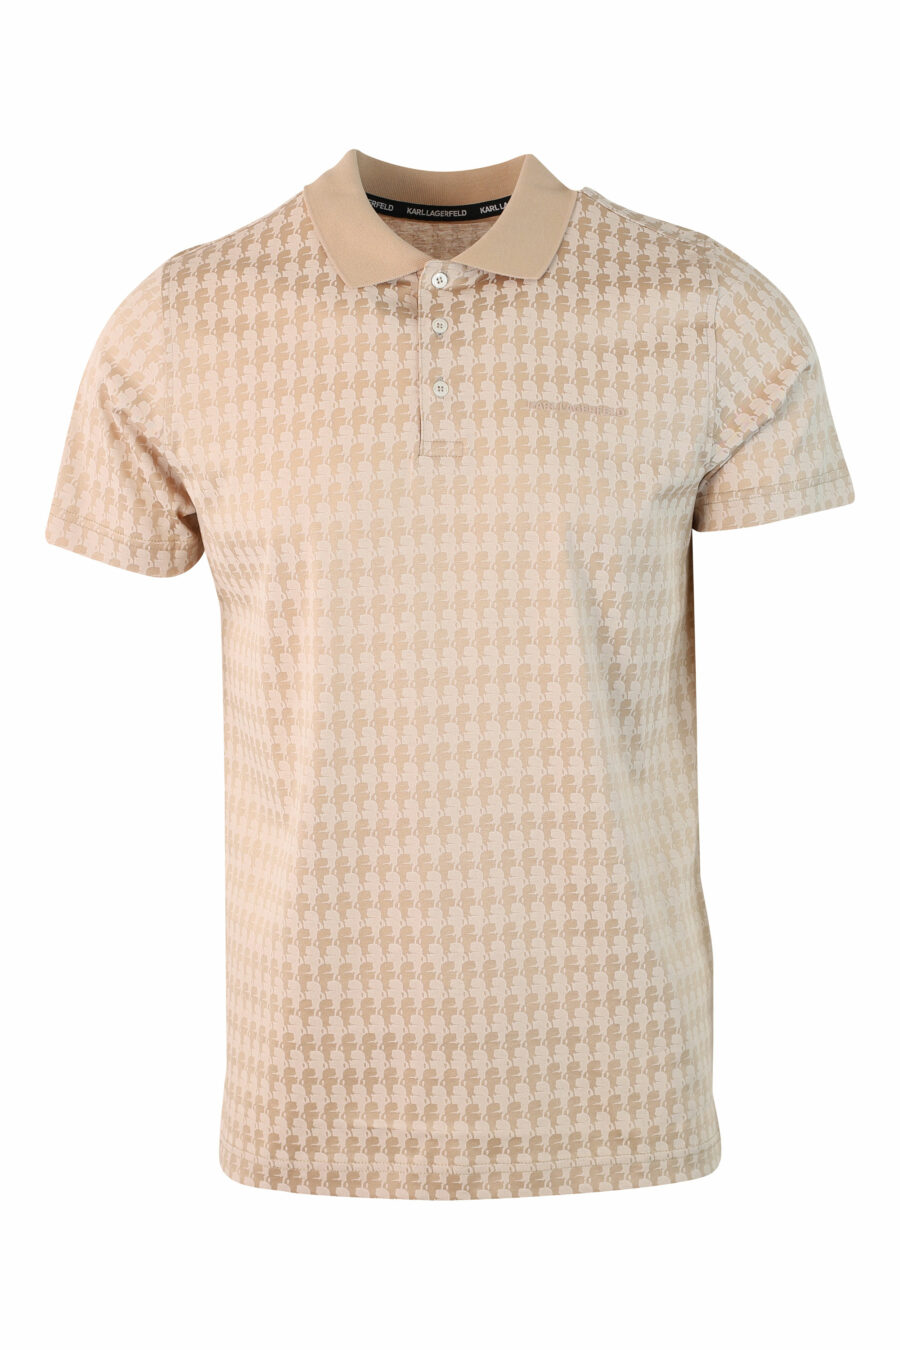 Beige polo shirt "all over logo" monochrome - IMG 9828